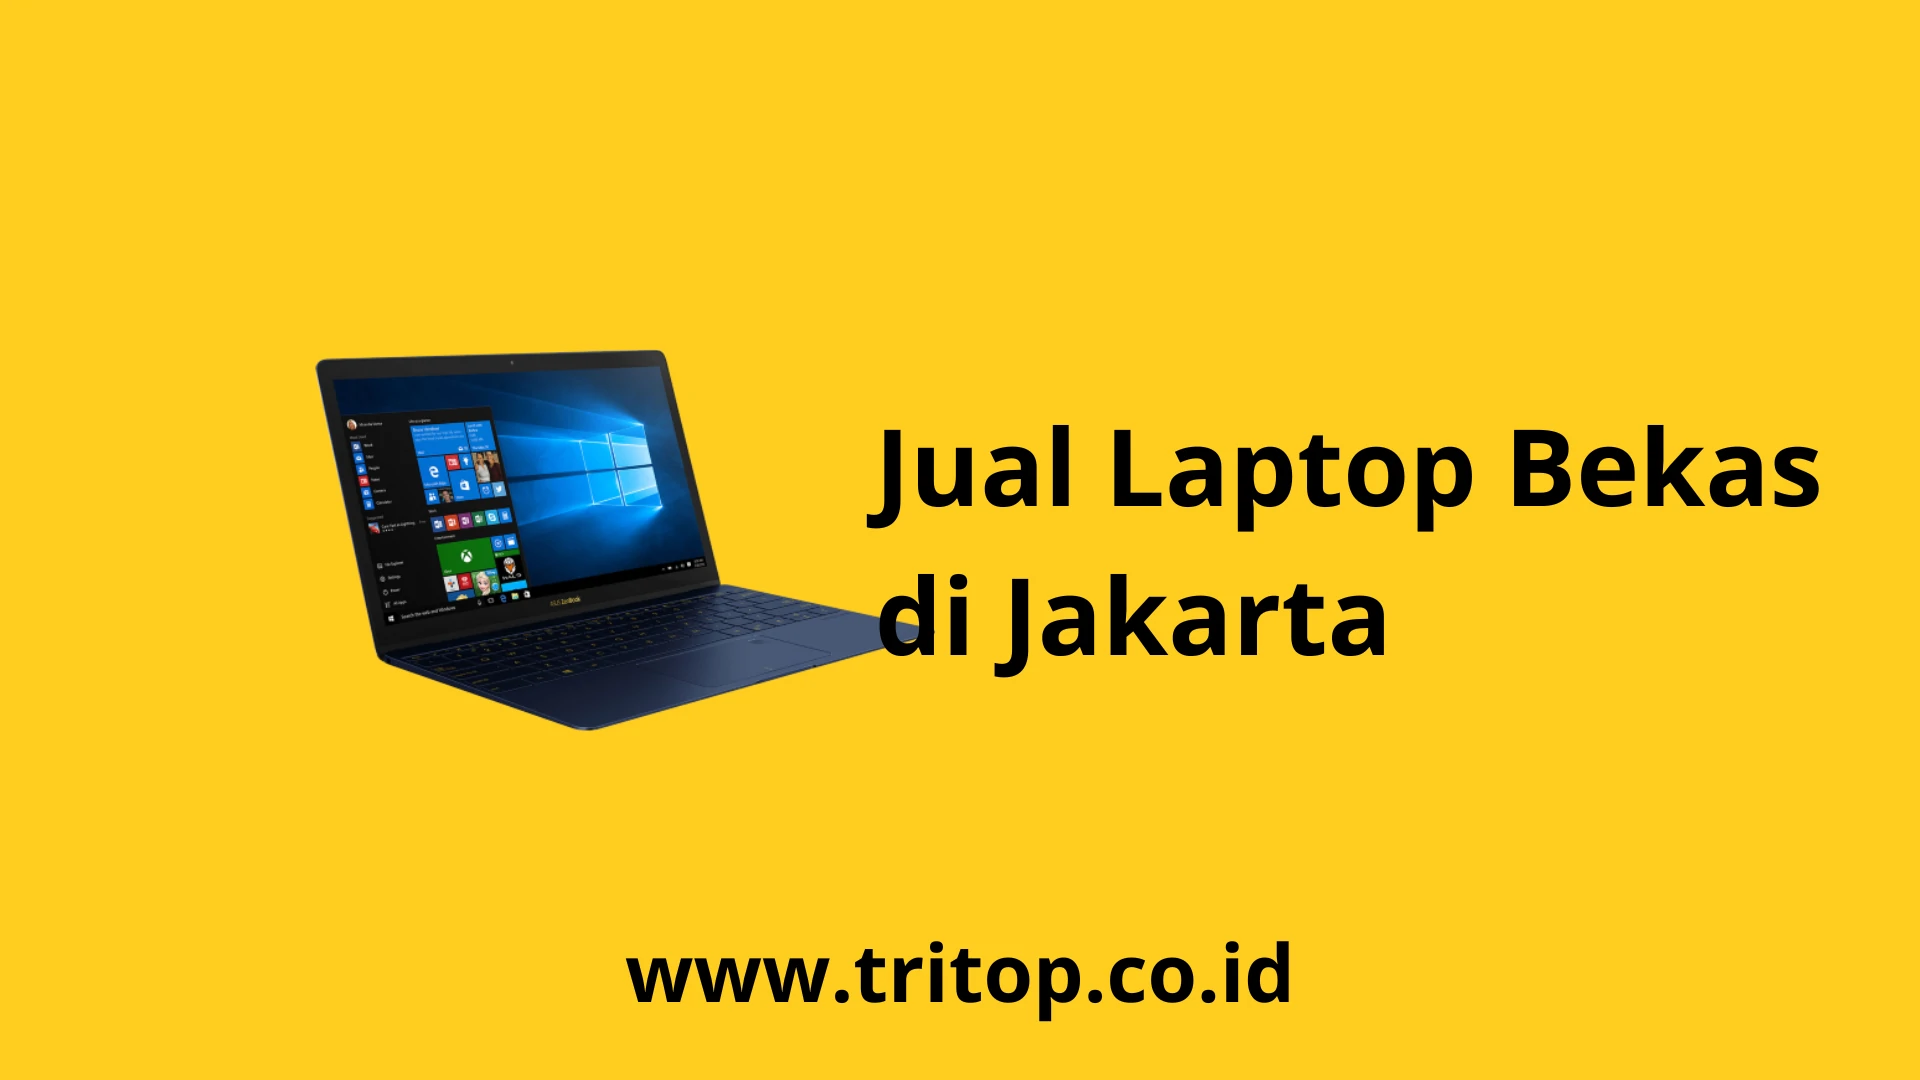 Jual Laptop Bekas Jakarta Tritop.co.id